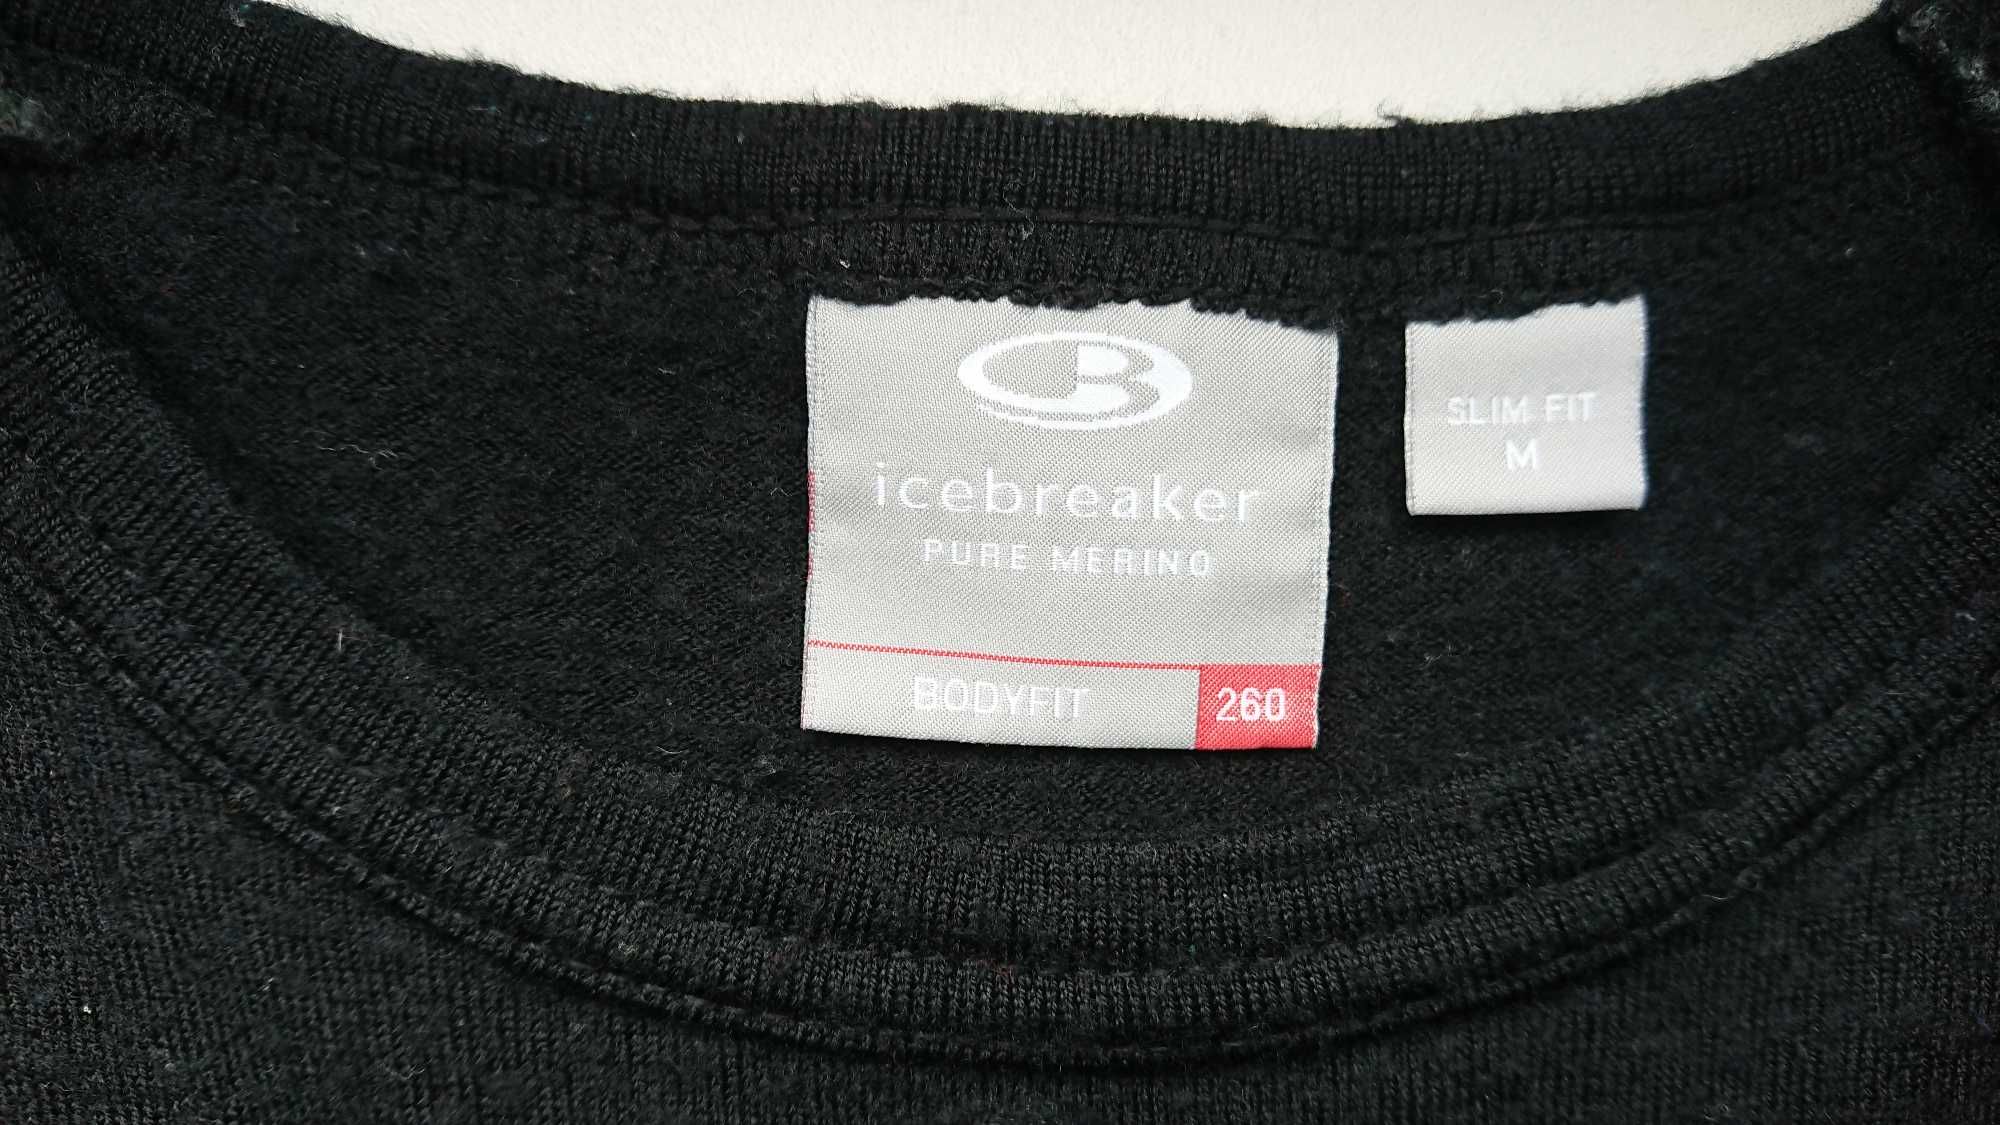 Термореглан Icebreaker bodyfit 260 100% шерсть мериноса merino wool